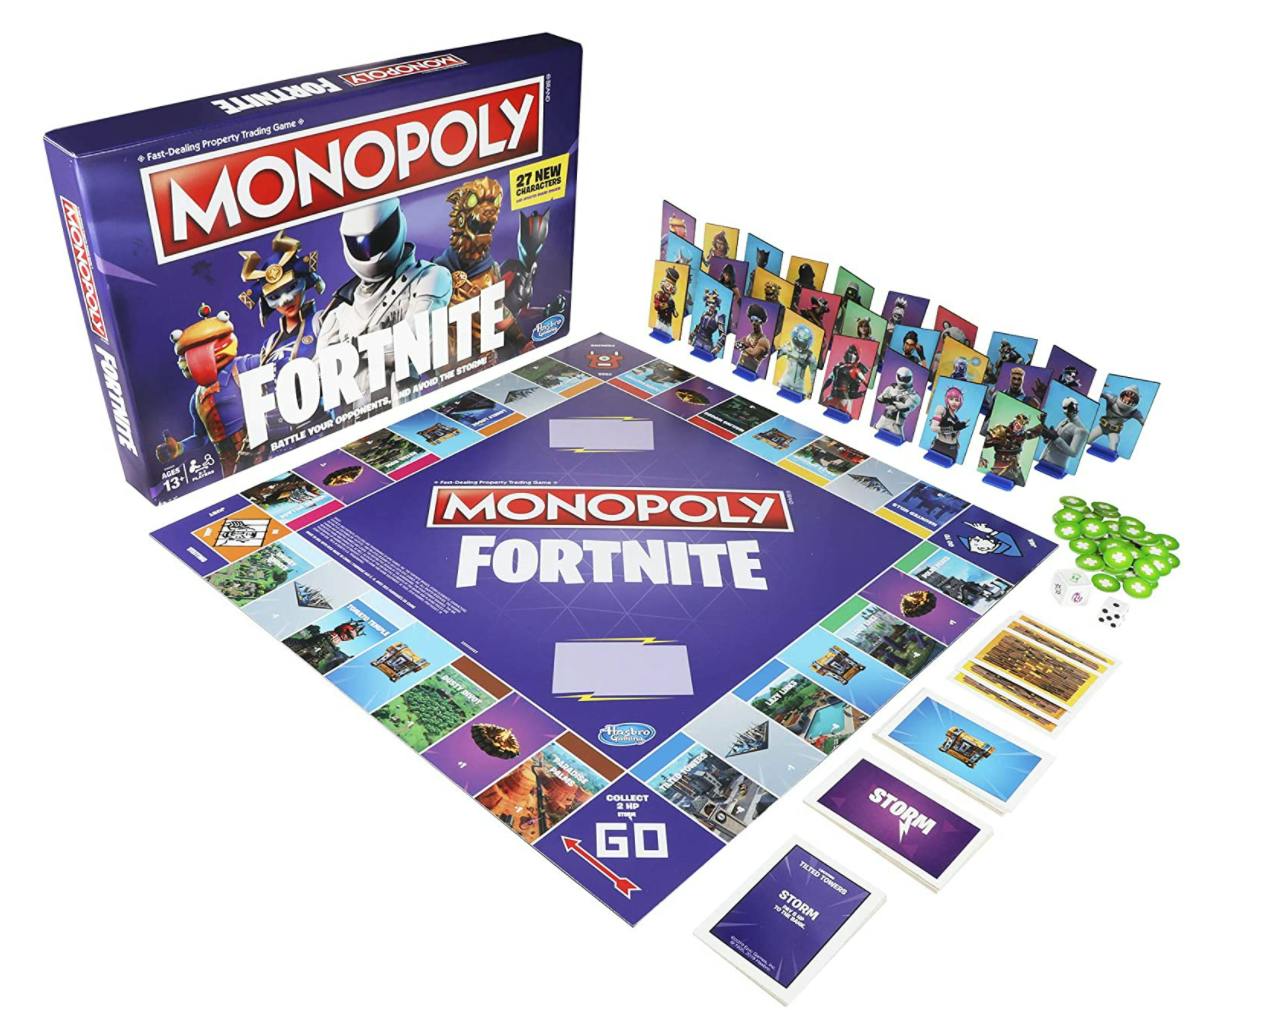 monopoly game price at shoprite